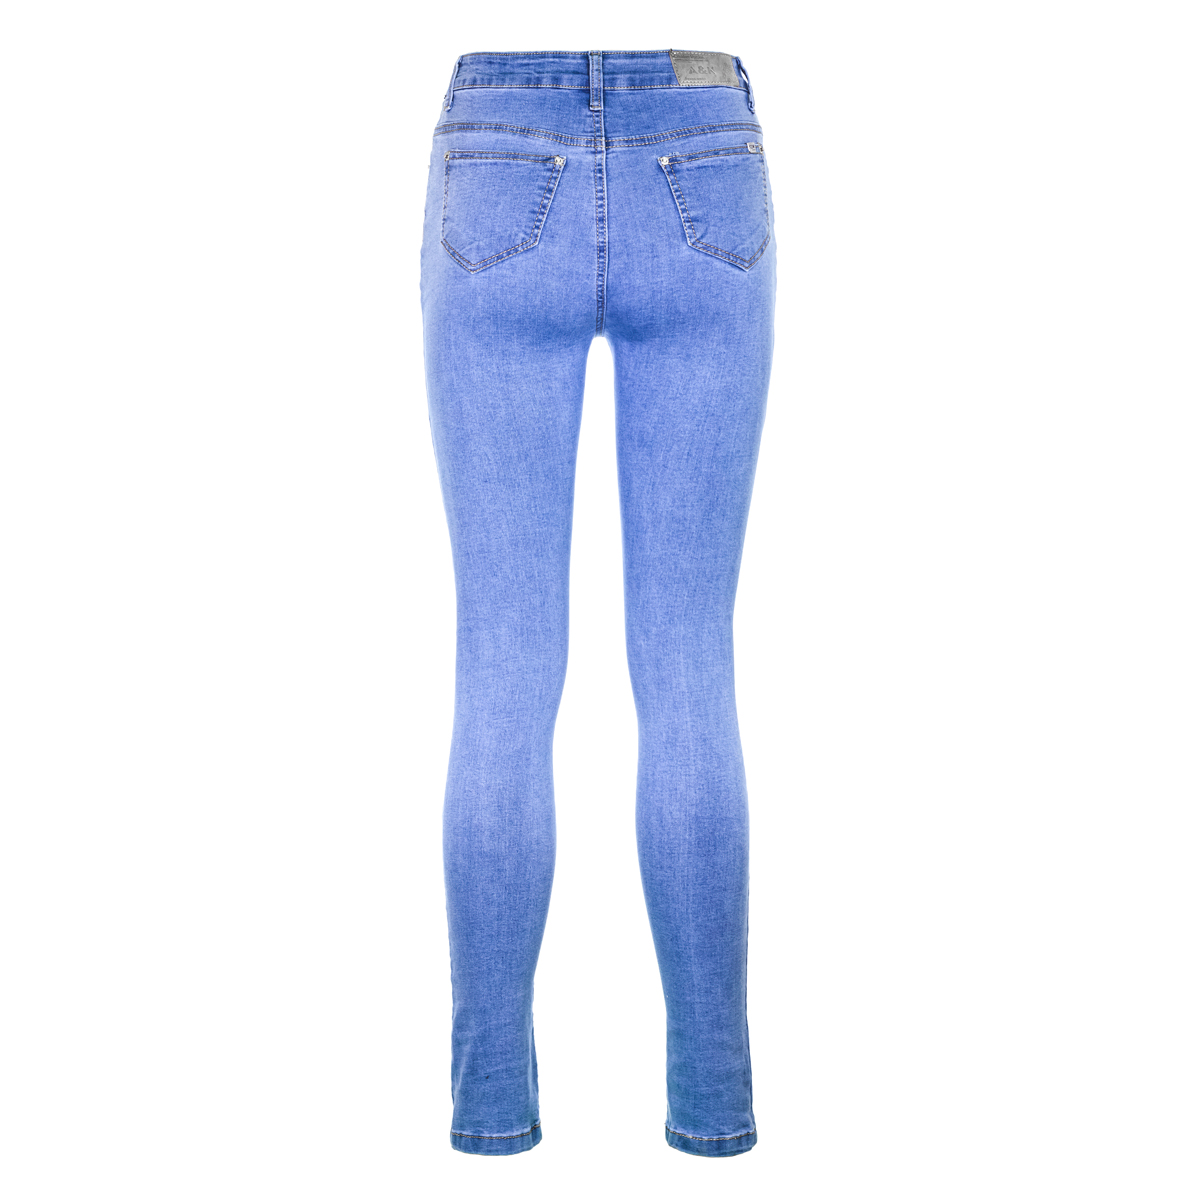 Жен. джинсы арт. 12-0155 Голубой р. 26 Китай, размер 26 - фото 3